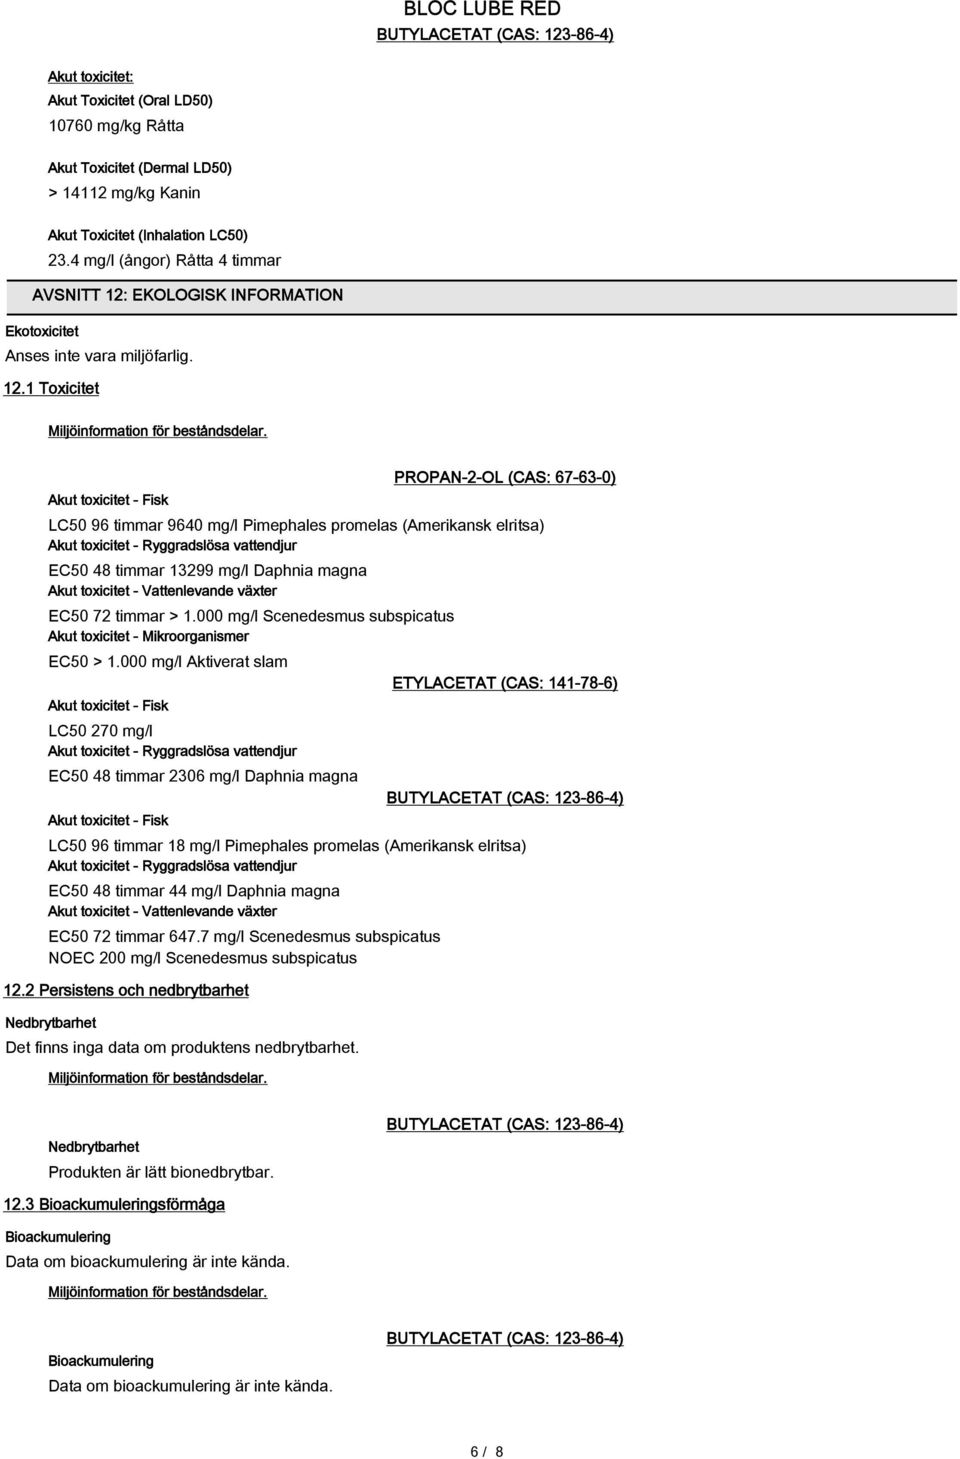 Akut toxicitet - Fisk PROPAN-2-OL (CAS: 67-63-0) LC50 96 timmar 9640 mg/l Pimephales promelas (Amerikansk elritsa) Akut toxicitet - Ryggradslösa vattendjur EC50 48 timmar 13299 mg/l Daphnia magna